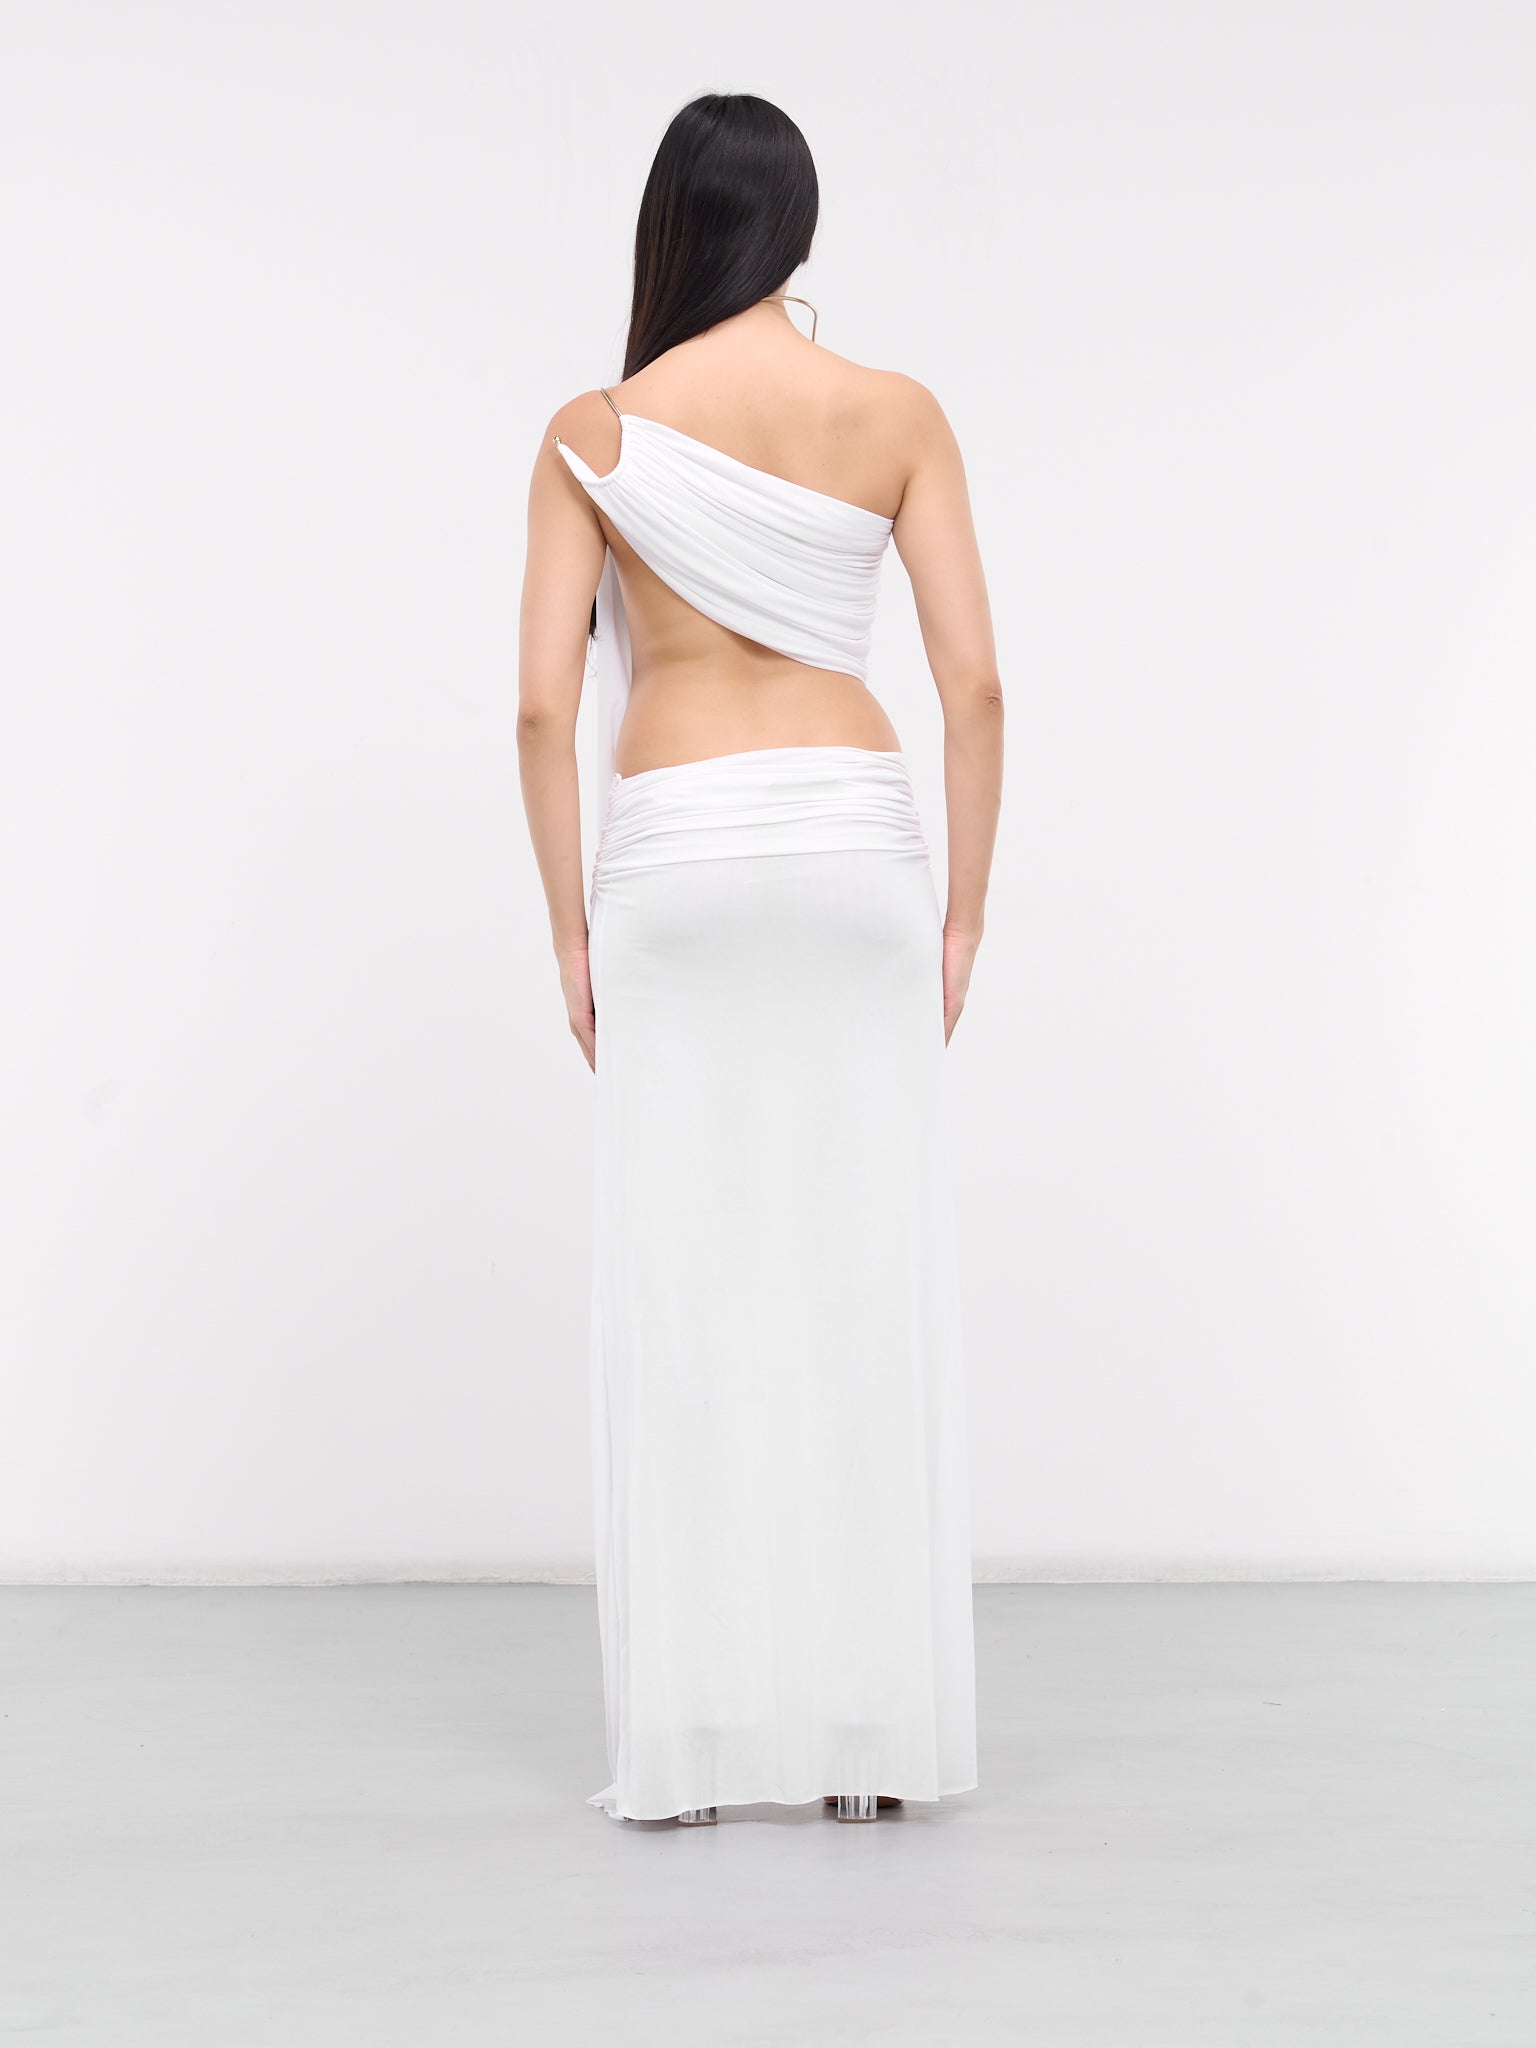 Elliptic Stone Drape Gown (24013603-WHITE)